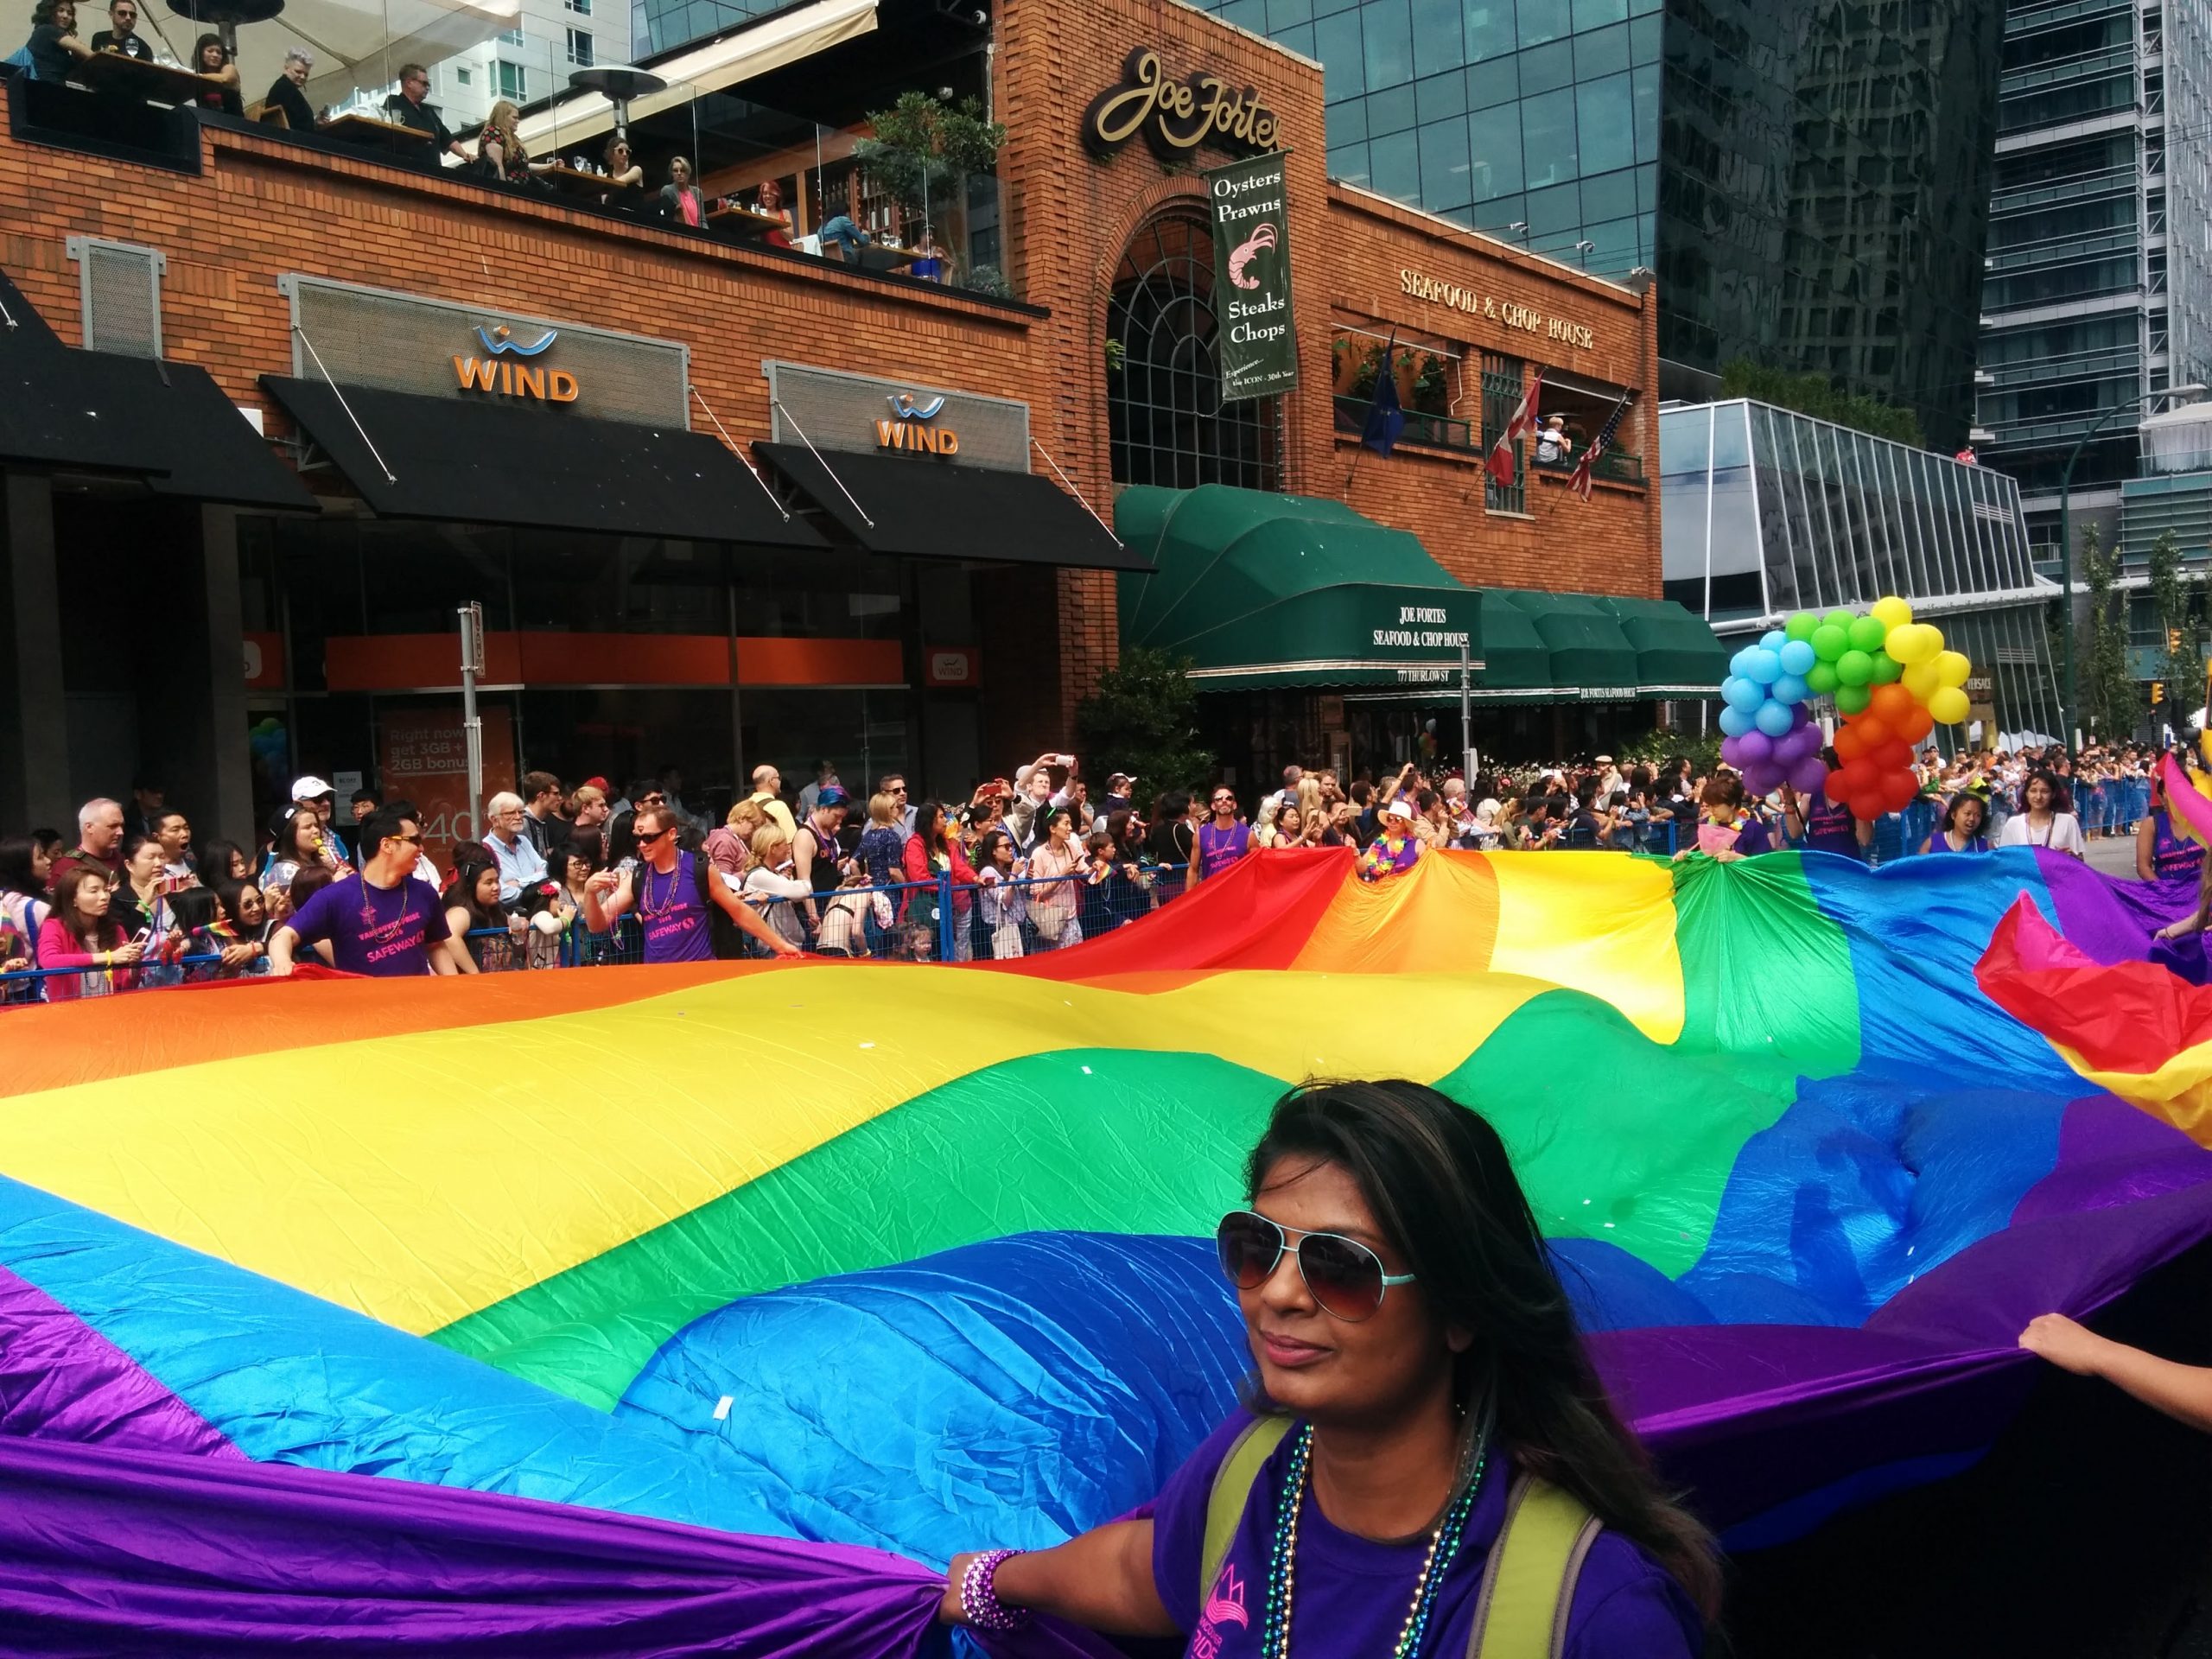 Vancouver Pride Parade returns after twoyear hiatus evdomada.ca